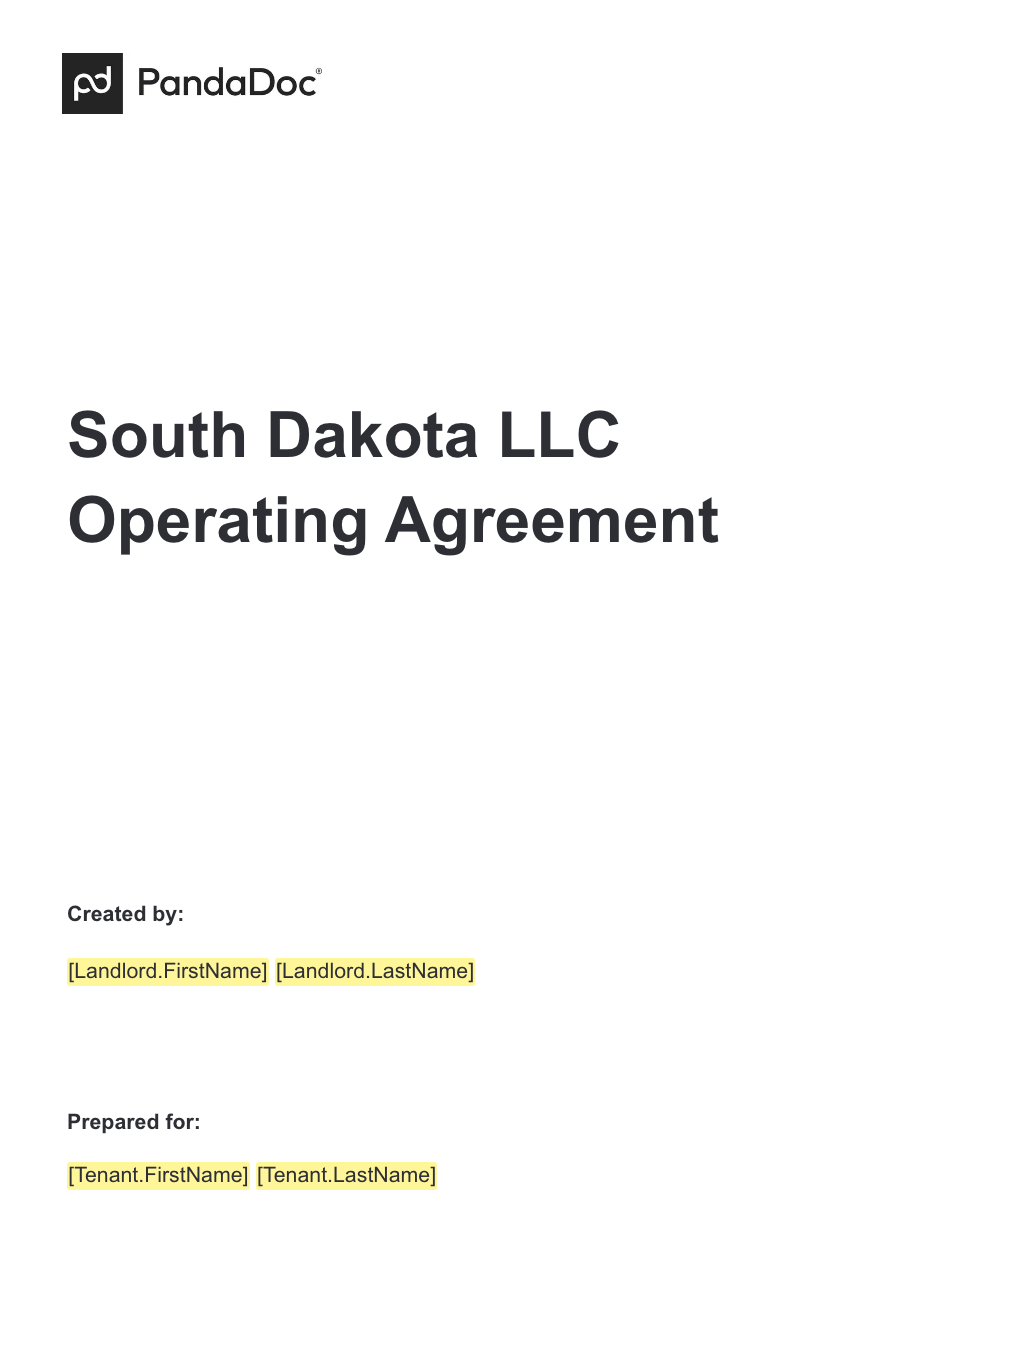 South Dakota LLC Operating Agreement 